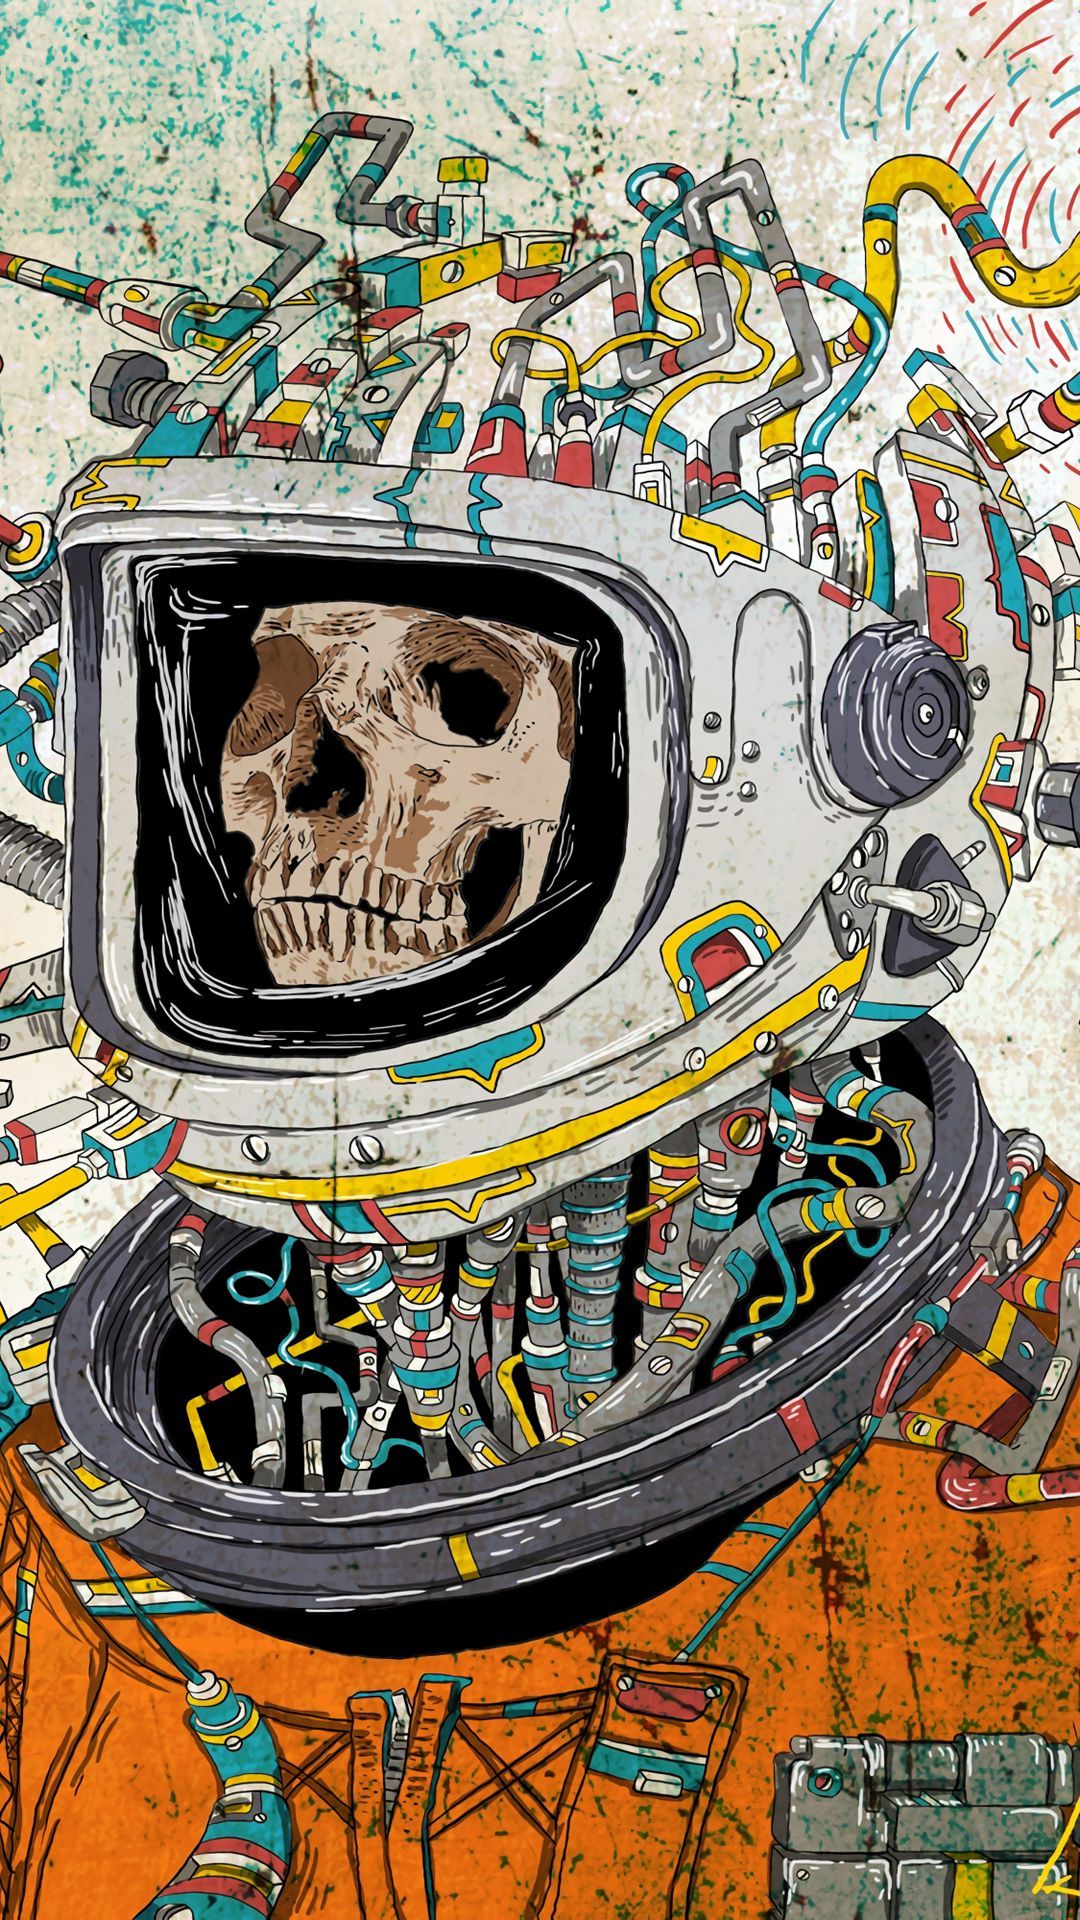 Astronaut Skull Space Suit Wallpapers